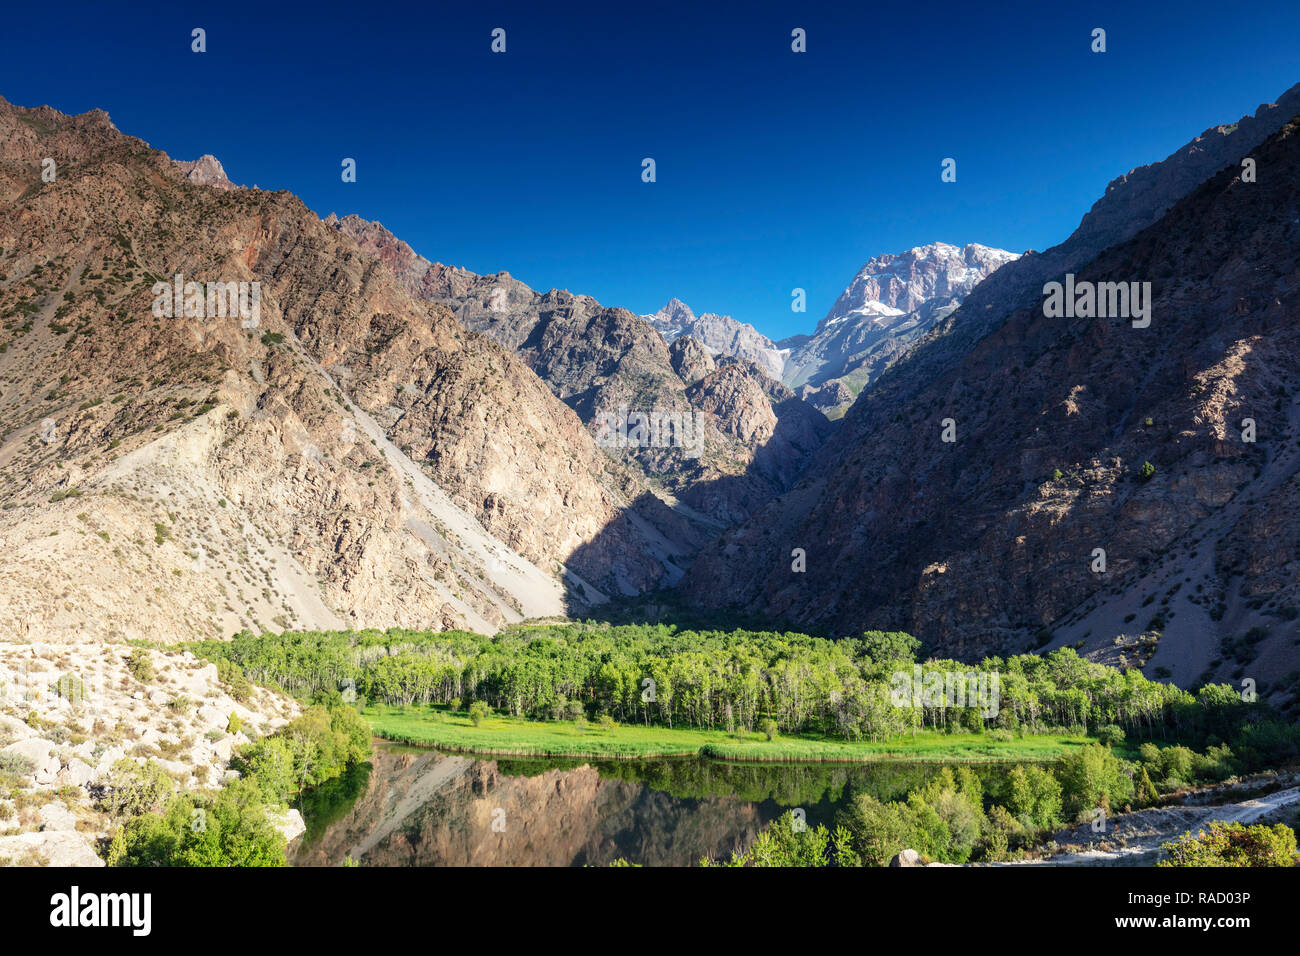 Oasis of trees below the mountains, Iskanderkul Lake, Fan Mountains, Tajikistan, Central Asia, Asia Stock Photo